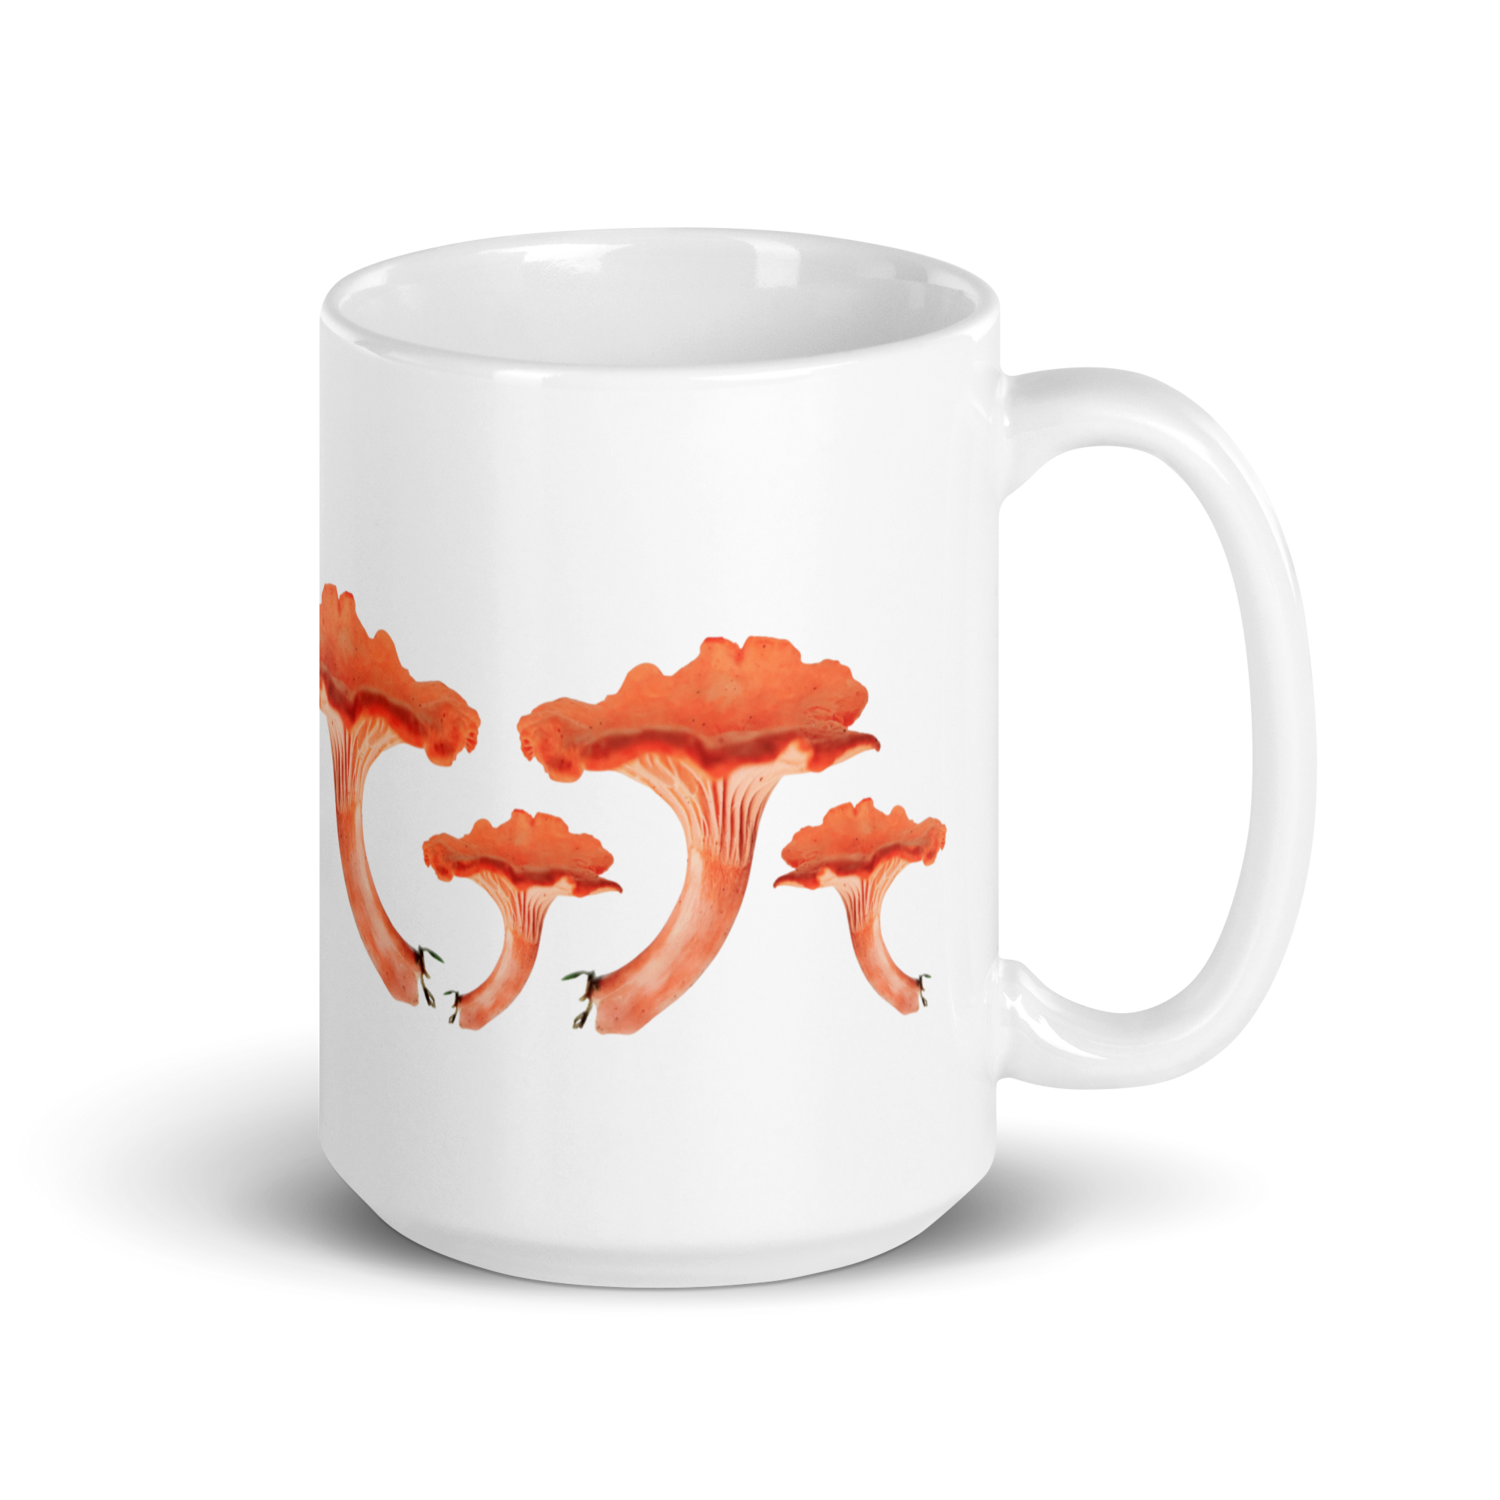 Wild Chanterelle Mushroom - Mug for Coffee and Tea, 15oz.